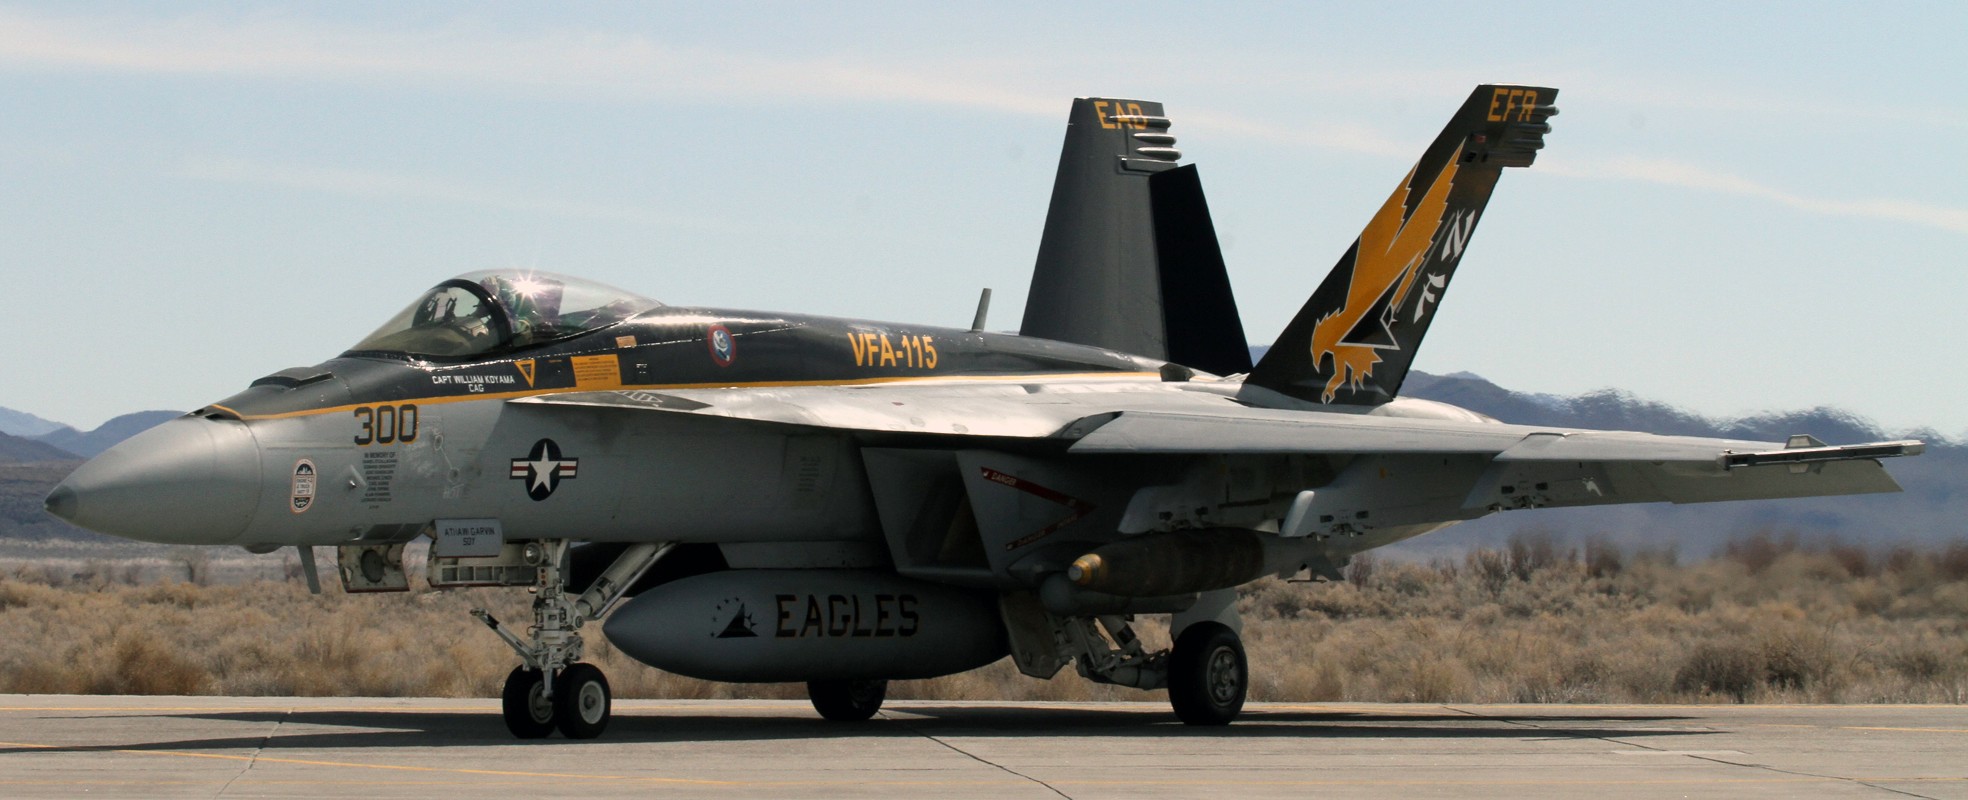 vfa-115 eagles strike fighter squadron f/a-18e super hornet cvw-5 nas fallon nevada 2015 74